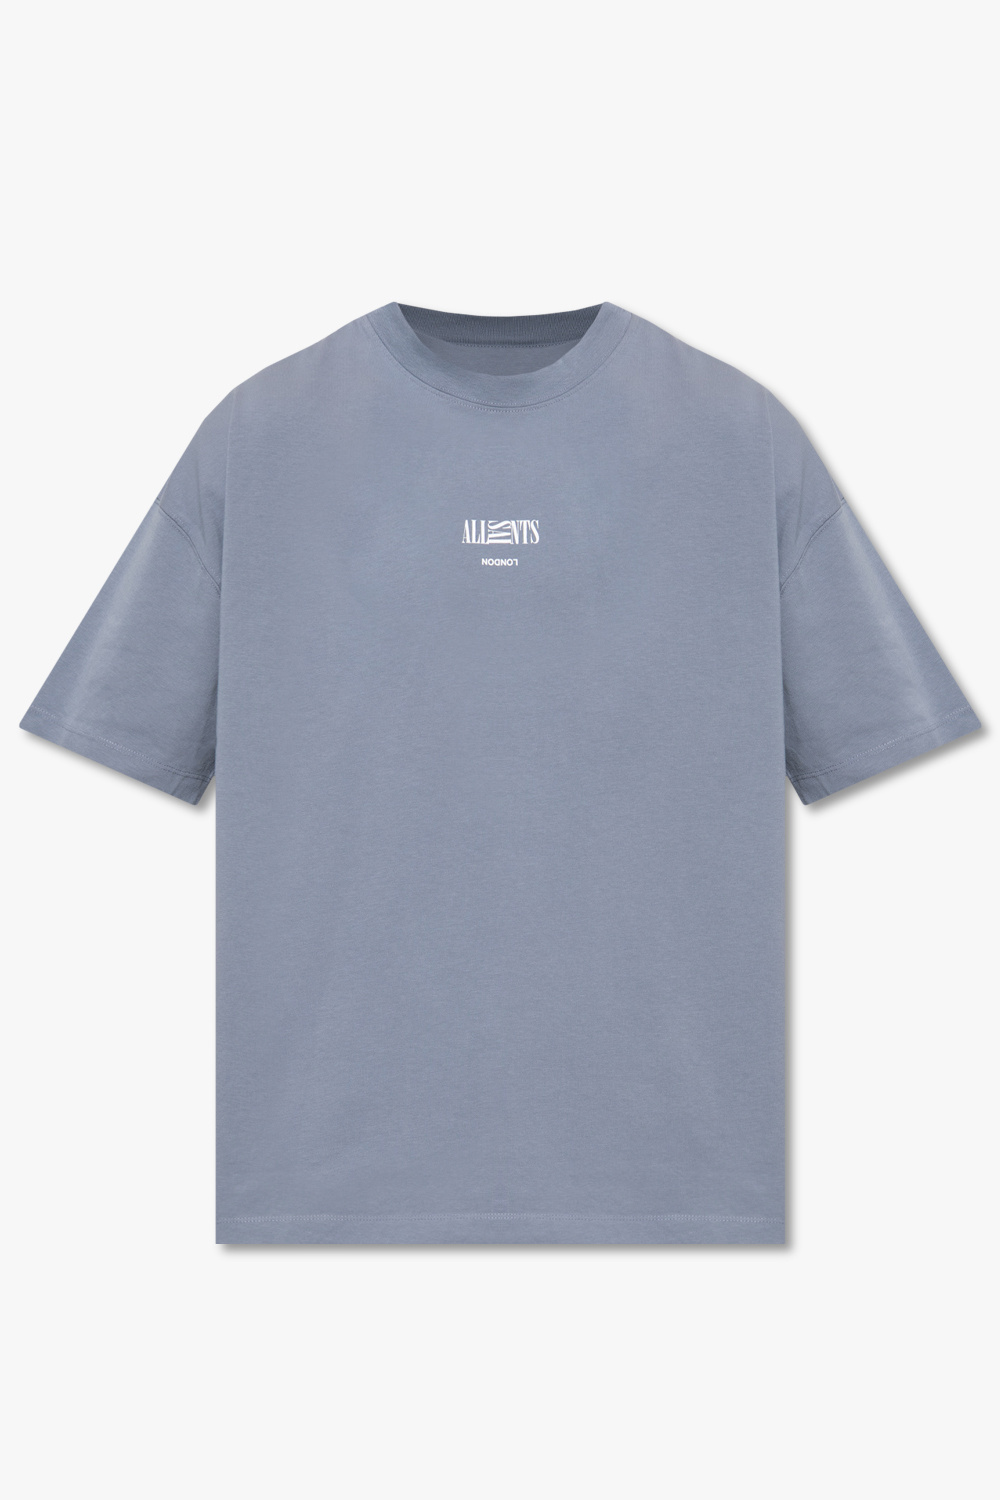 AllSaints ‘Burman’ T-shirt | Men's Clothing | Vitkac